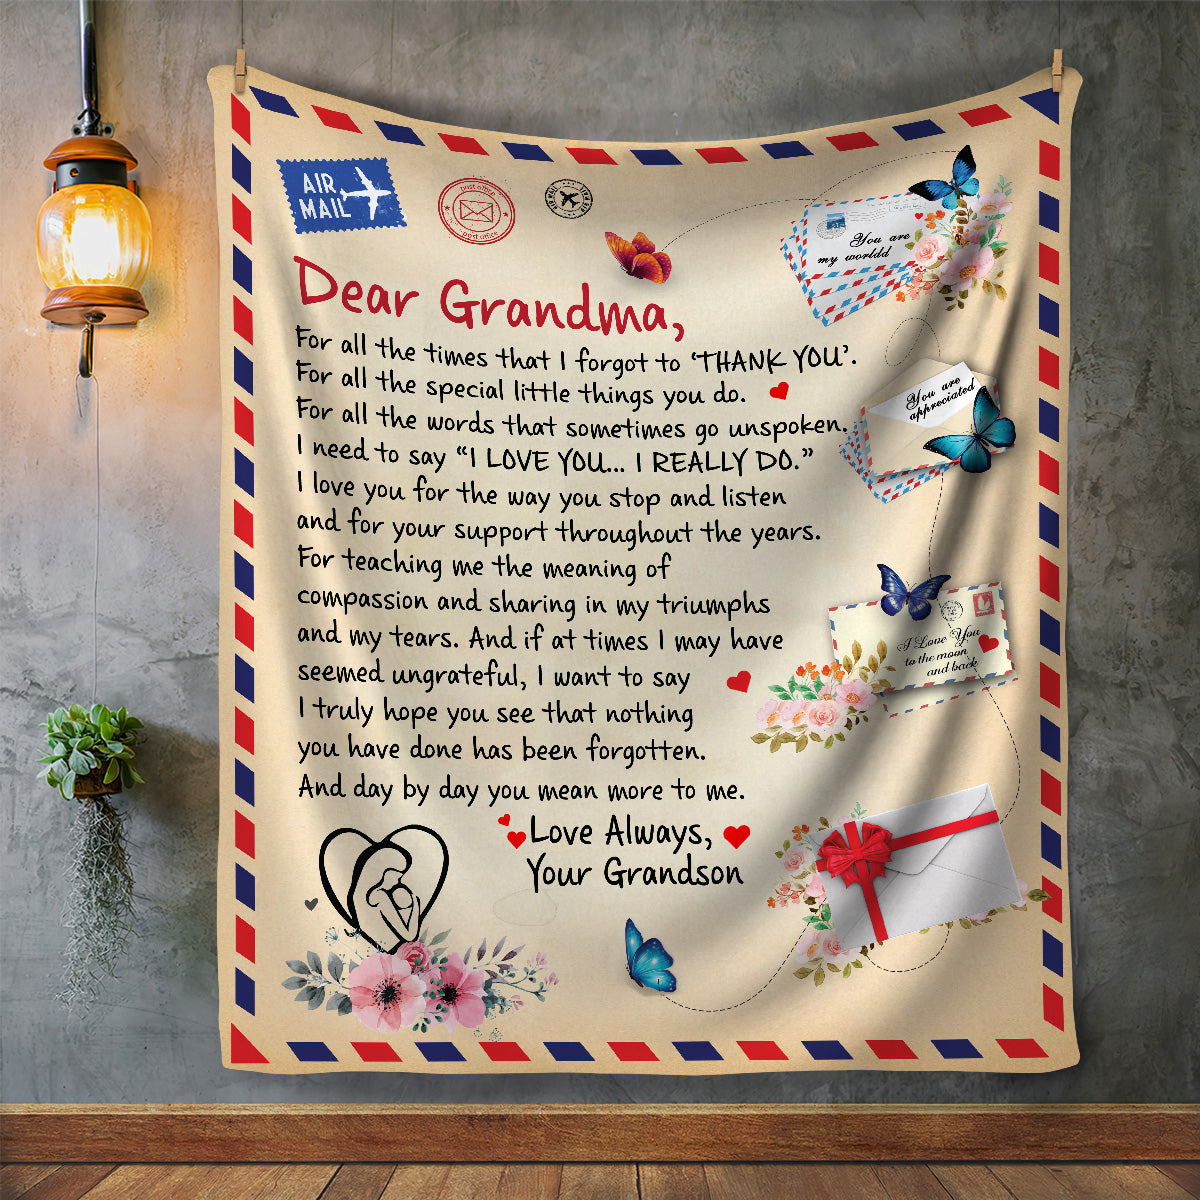 Grandma - Post Card Blanket - From Grandson